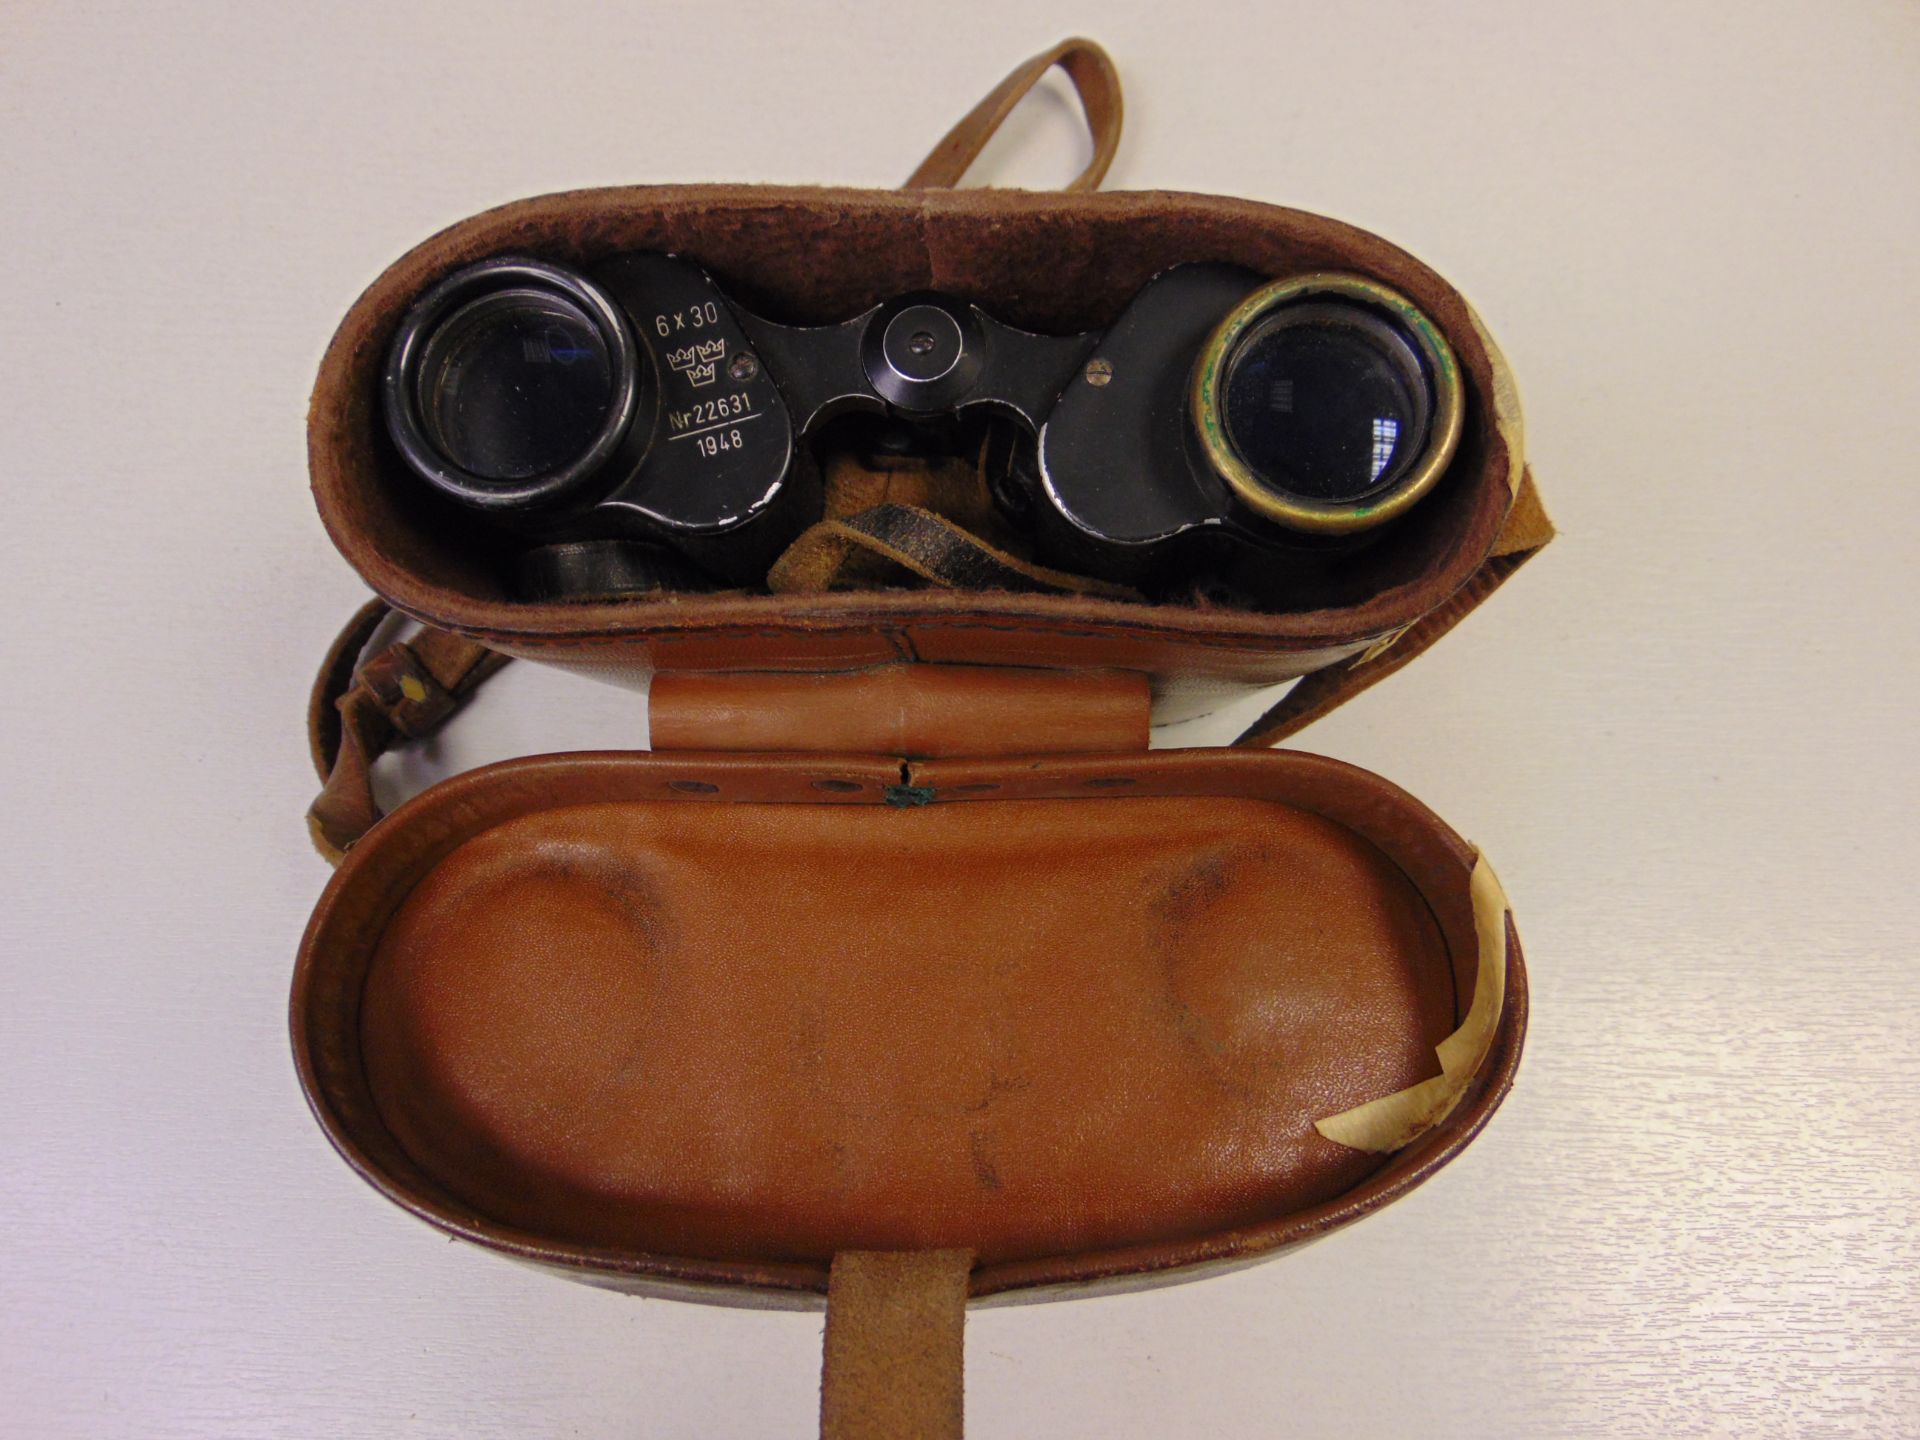 Nice Original Pair of NIFE 6 x 30 Binoculars in Original Leather Case - Image 2 of 11